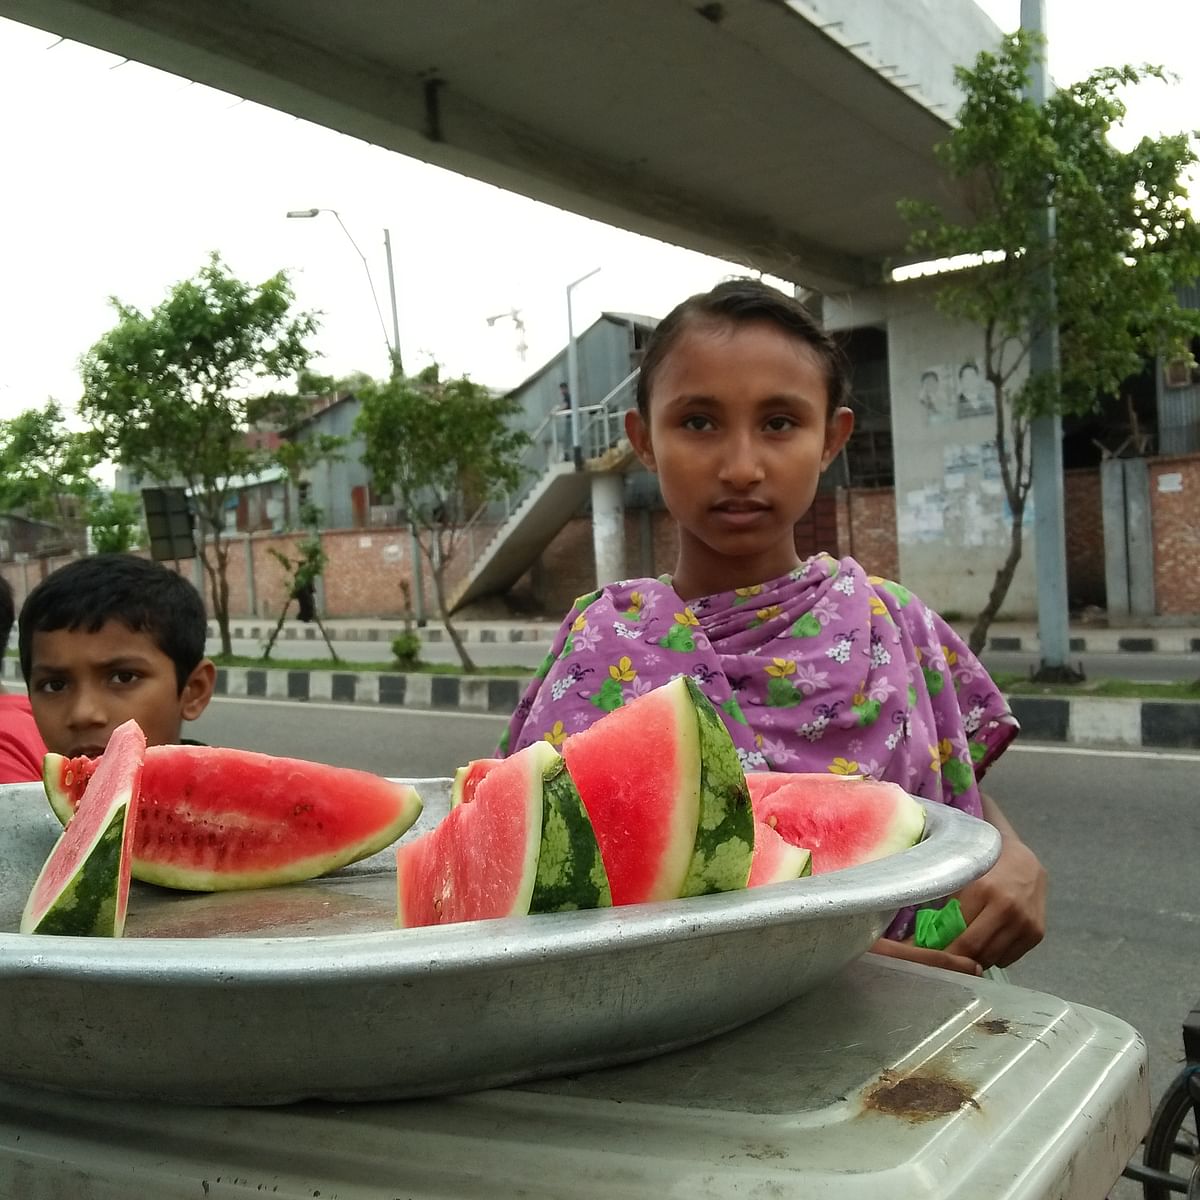 The underprivileged children sell watermelon slices and also play in Hatirjheel, Dhaka. A recently taken photo by Nusrat Nowrin